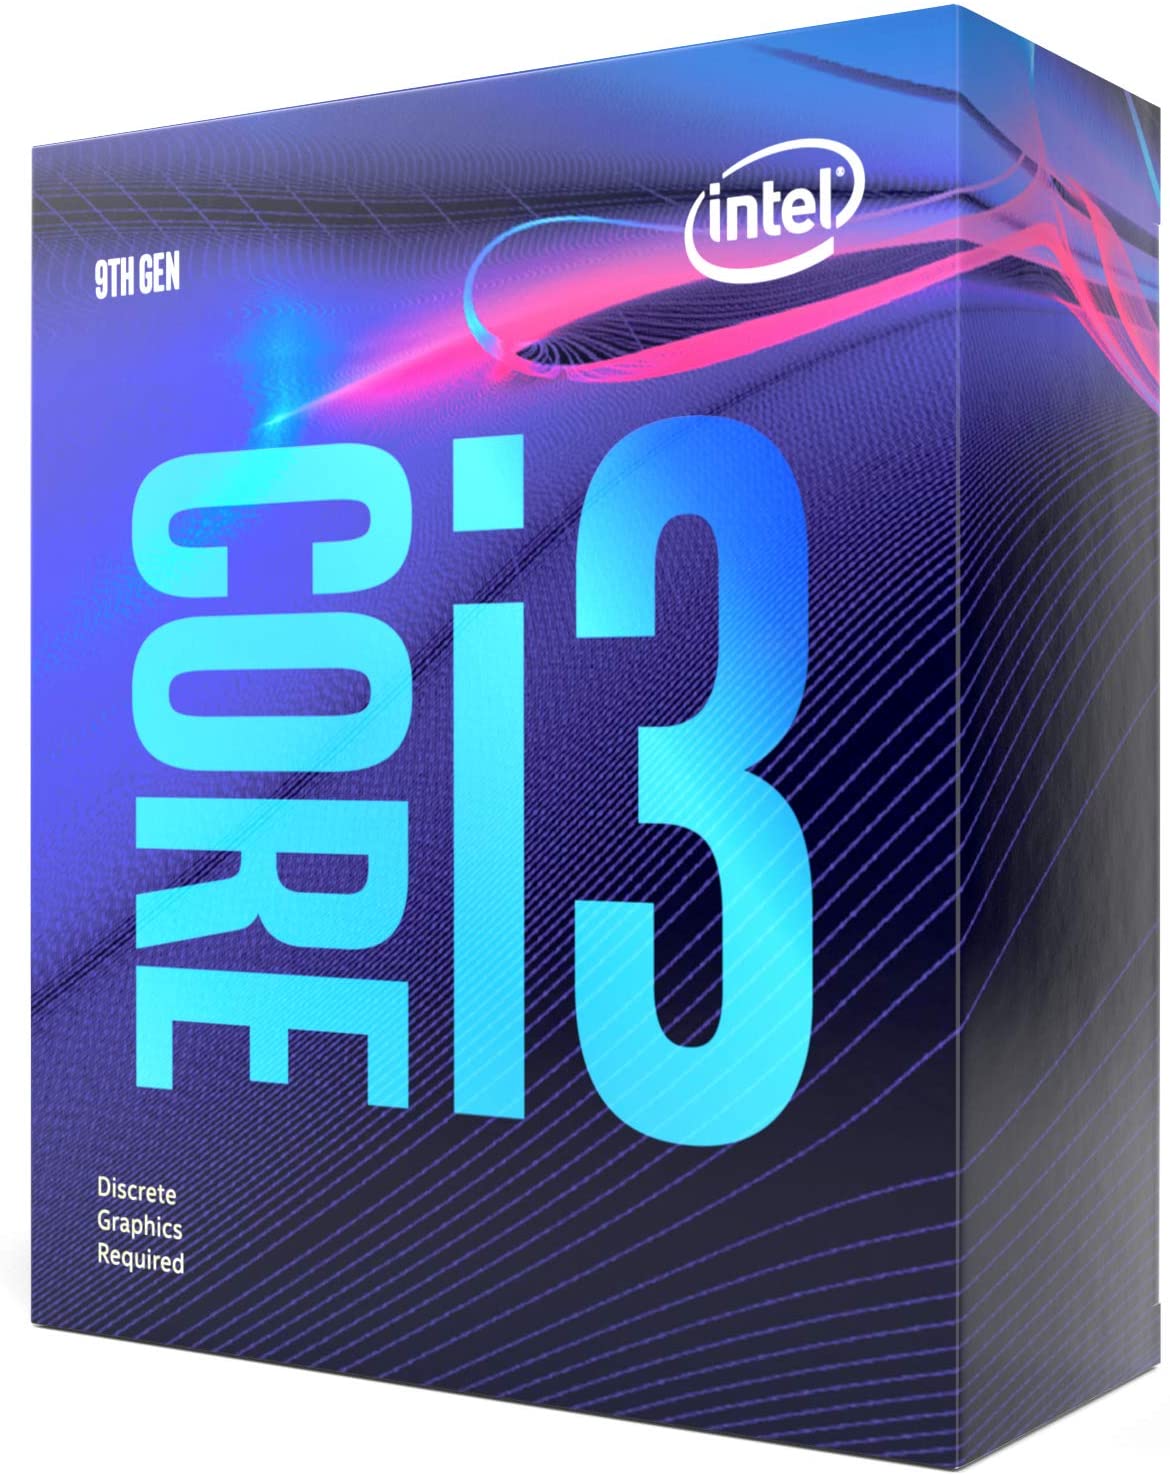 Intel 9th Generation Core i3-9100F CPU (Coffee Lake, 4/4 Cores/Threads, 3.6GHz Base, 4.2GHz Boost, Socket LGA 1151 (300 Series), 65W TDP Desktop Processor), Model BX80684i39100F